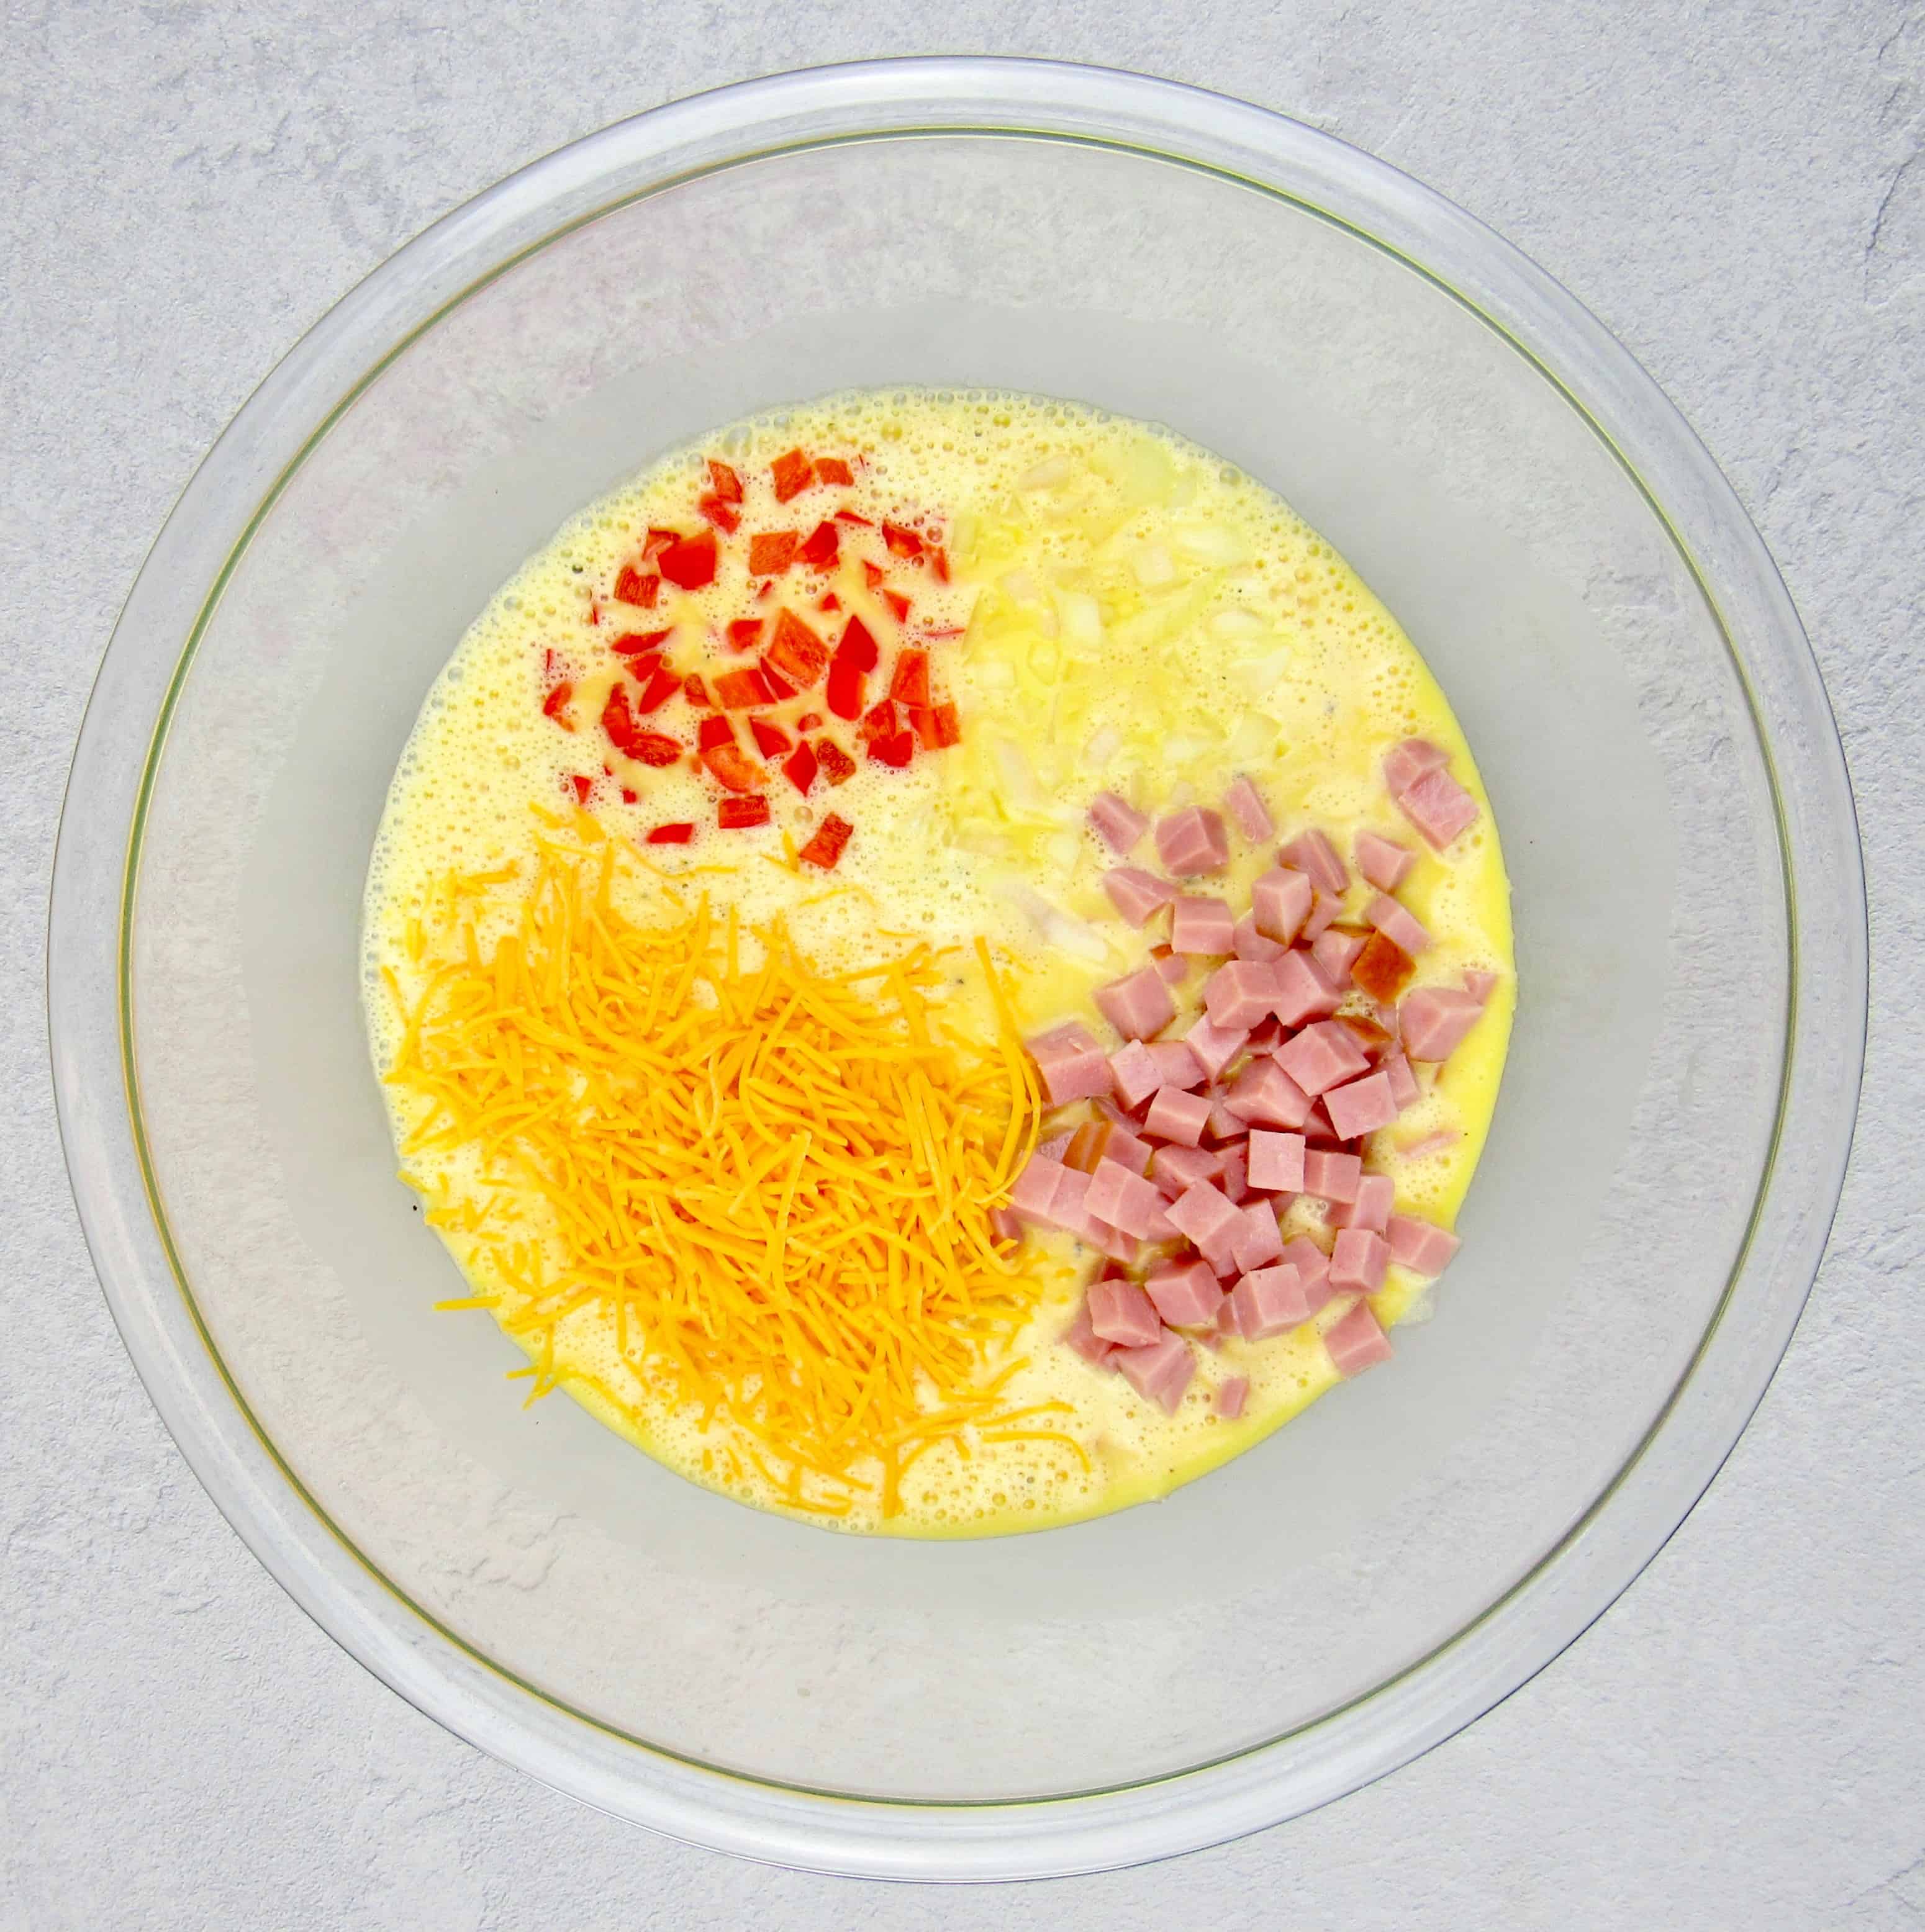 breakfast casserole egg mixture is glass mixing bowl